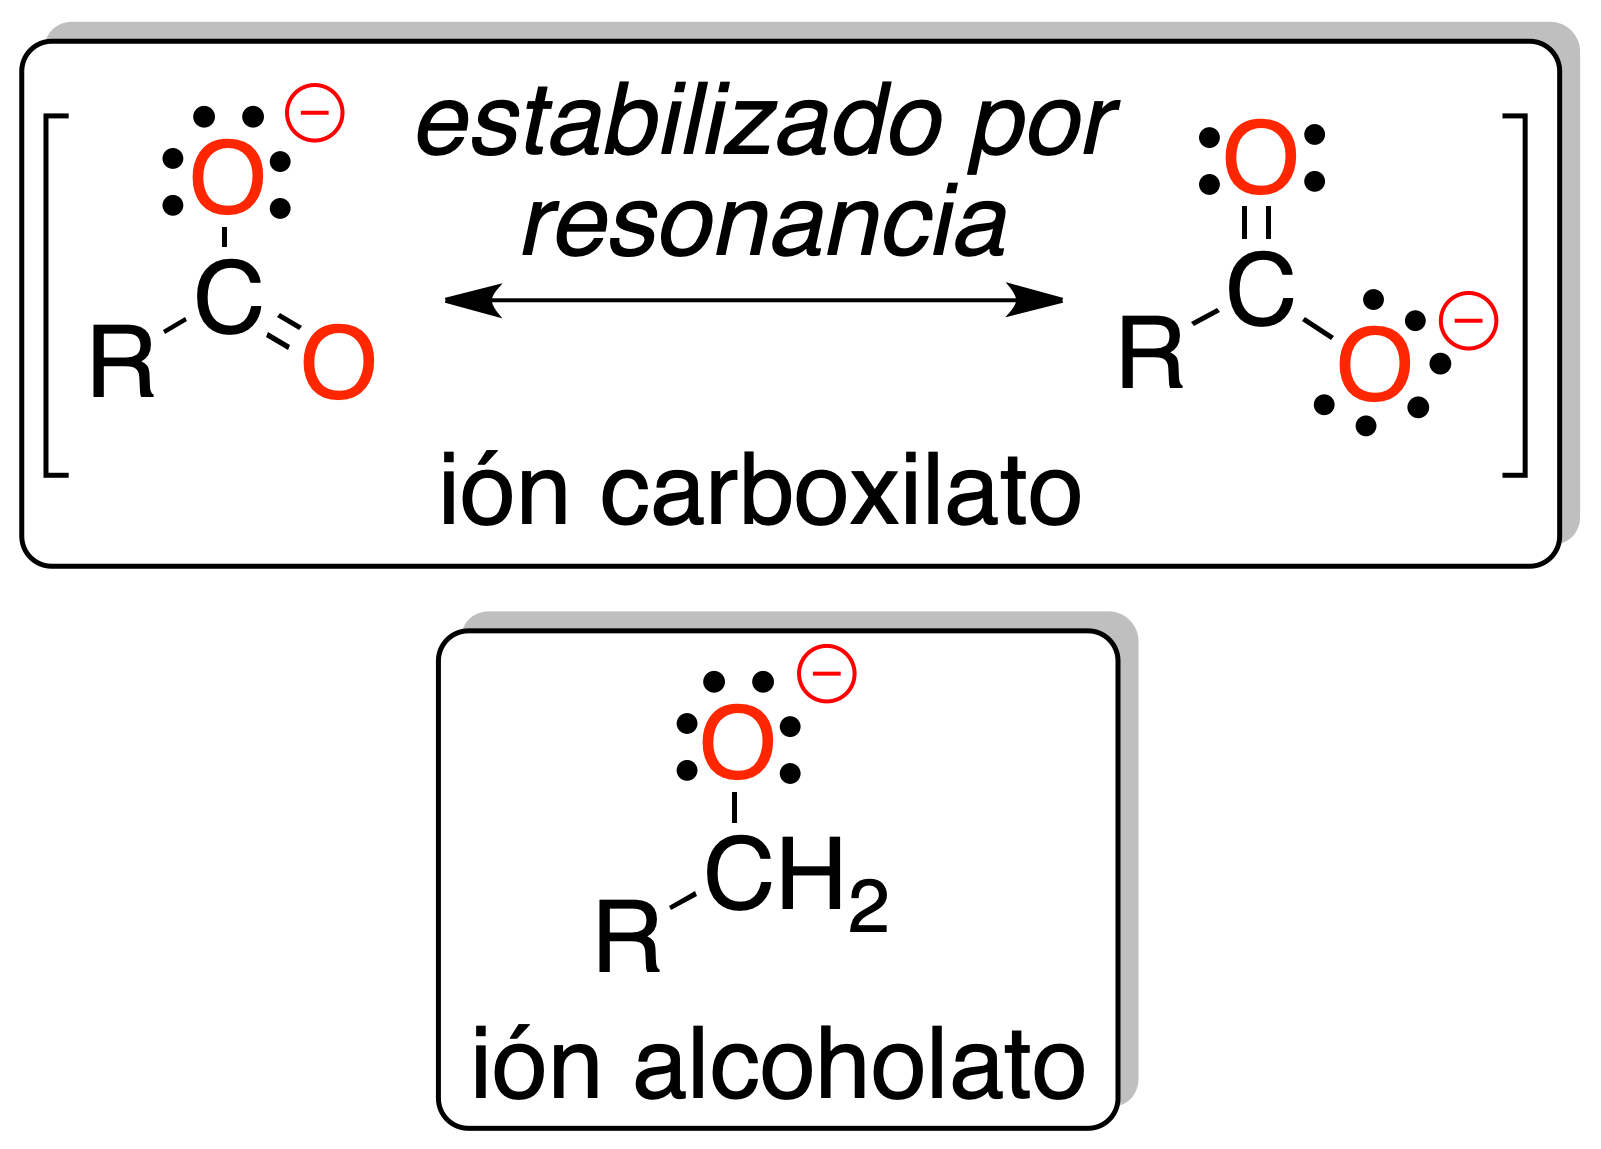 functional group carboxylic acid: Acid-base properties